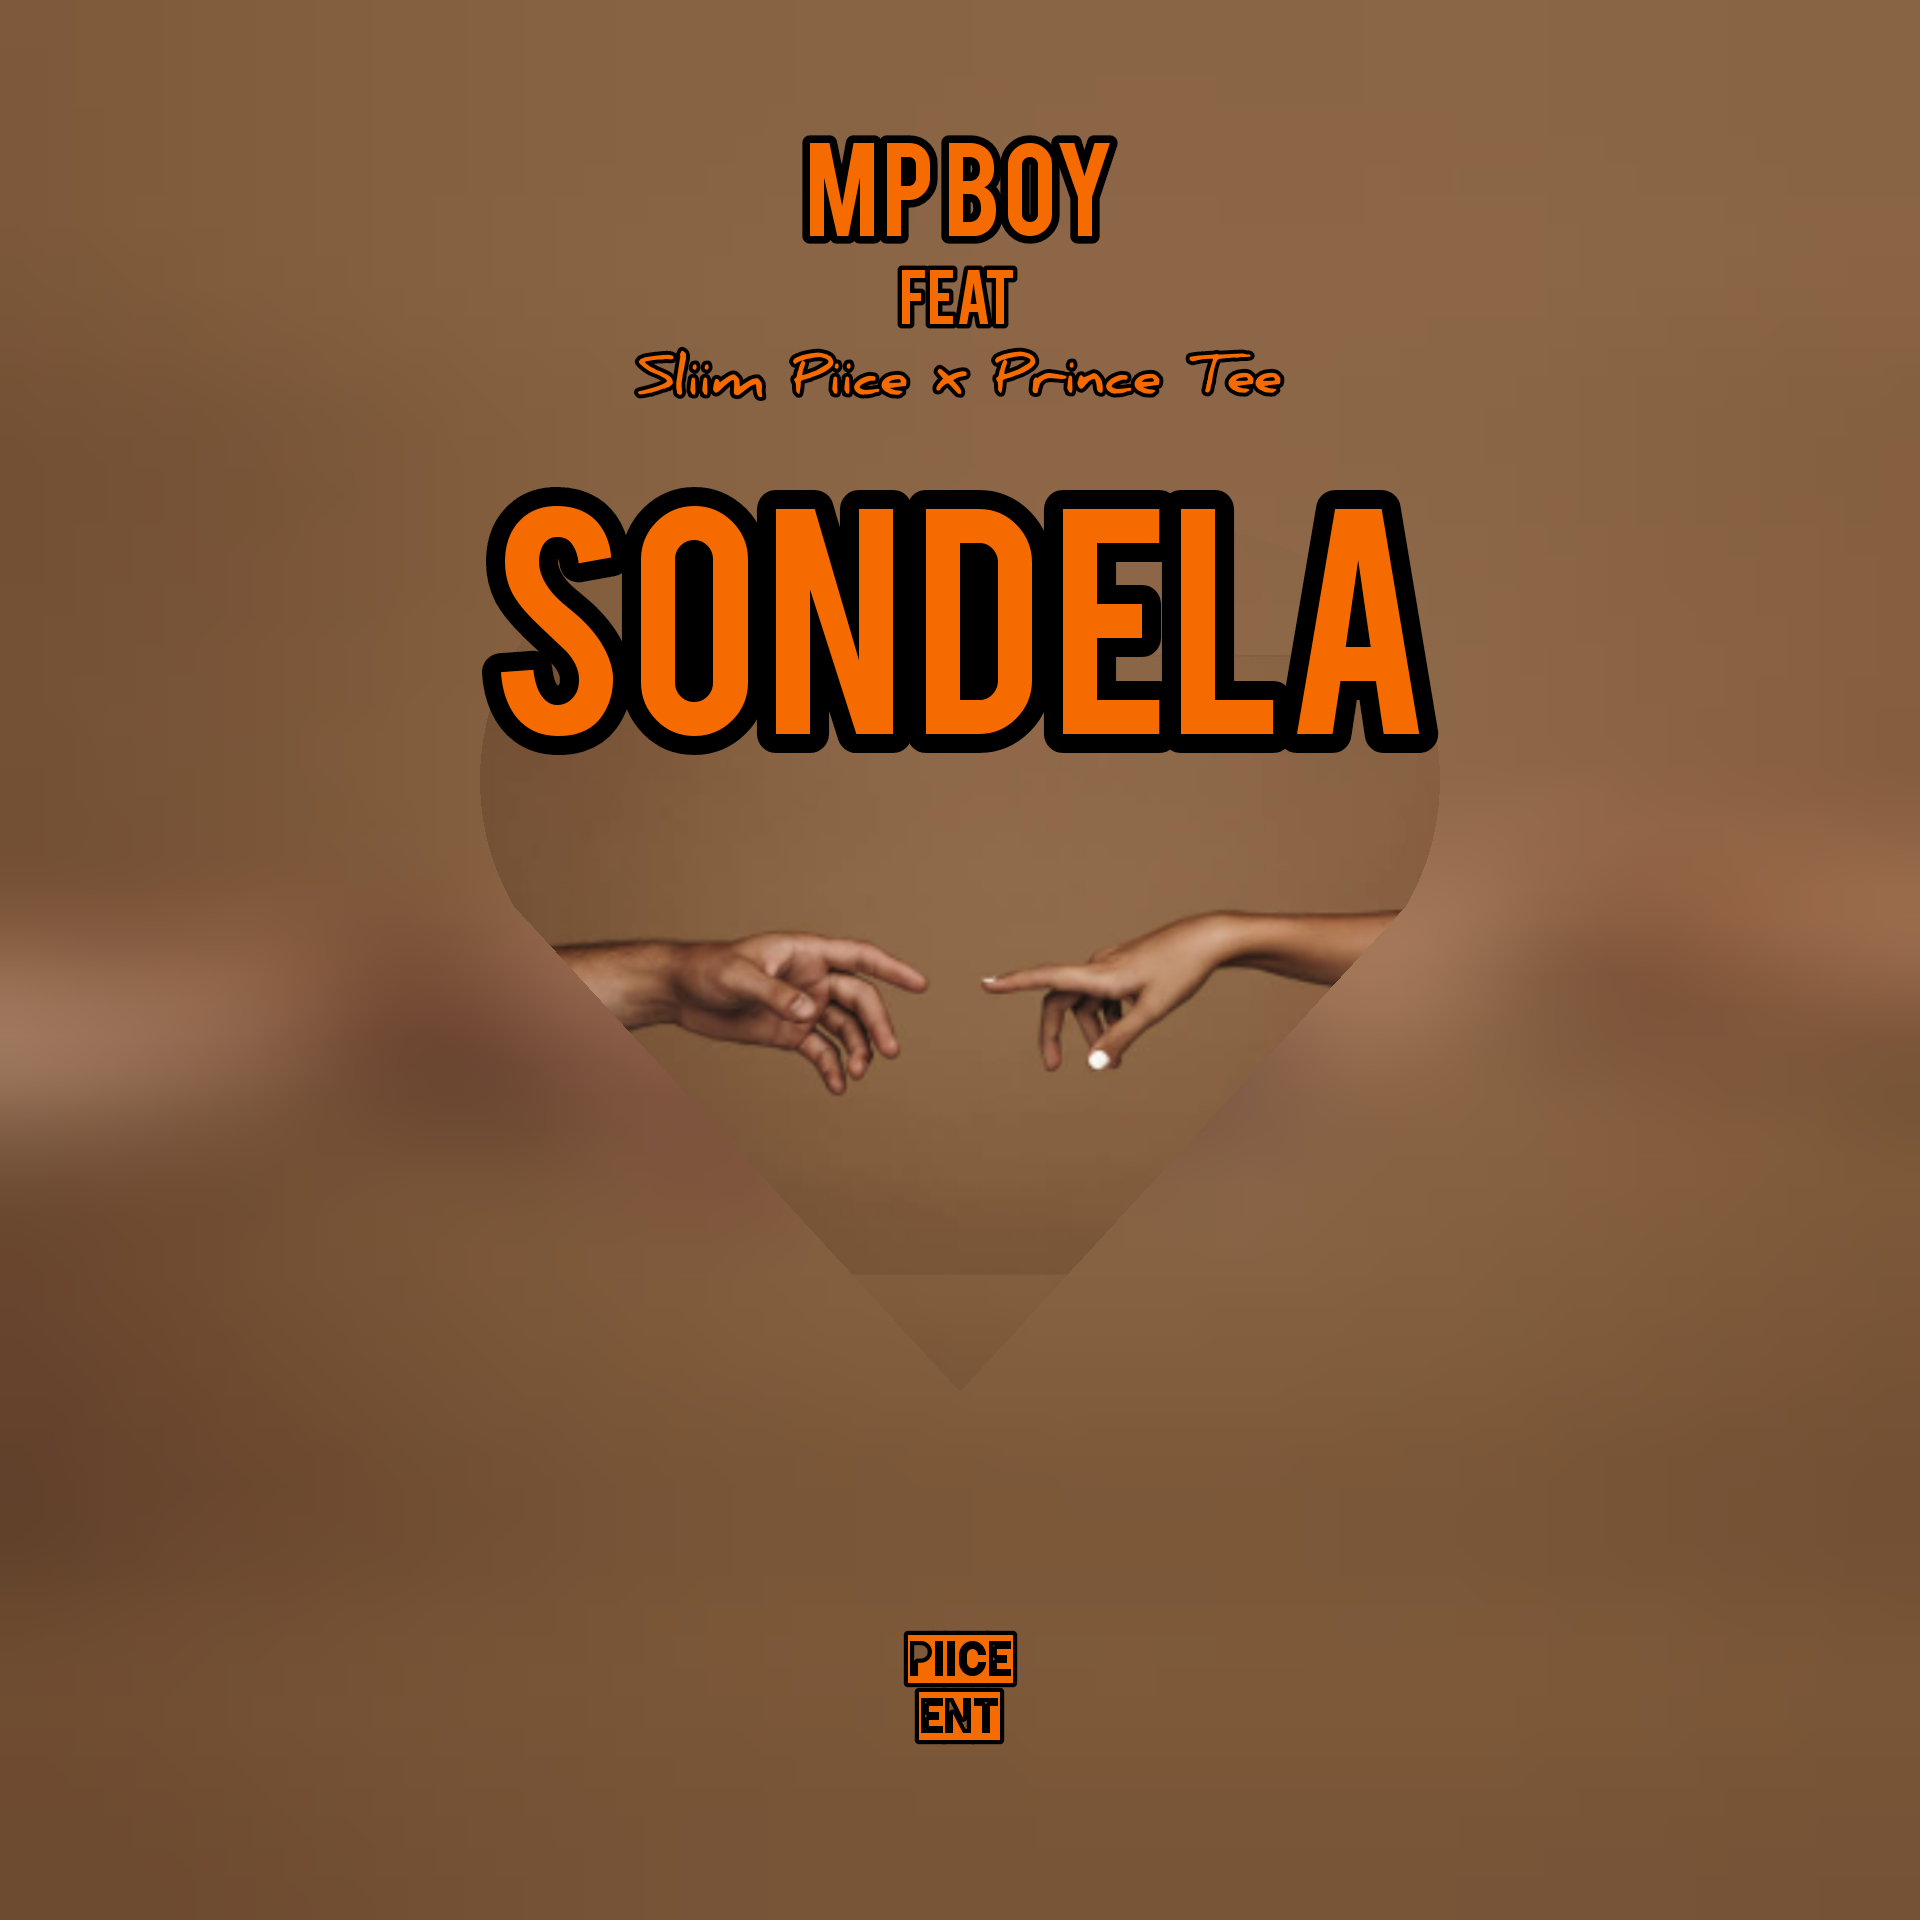 SONDELA (ft.Sliim Piice x Prince Tee) - MP Boy